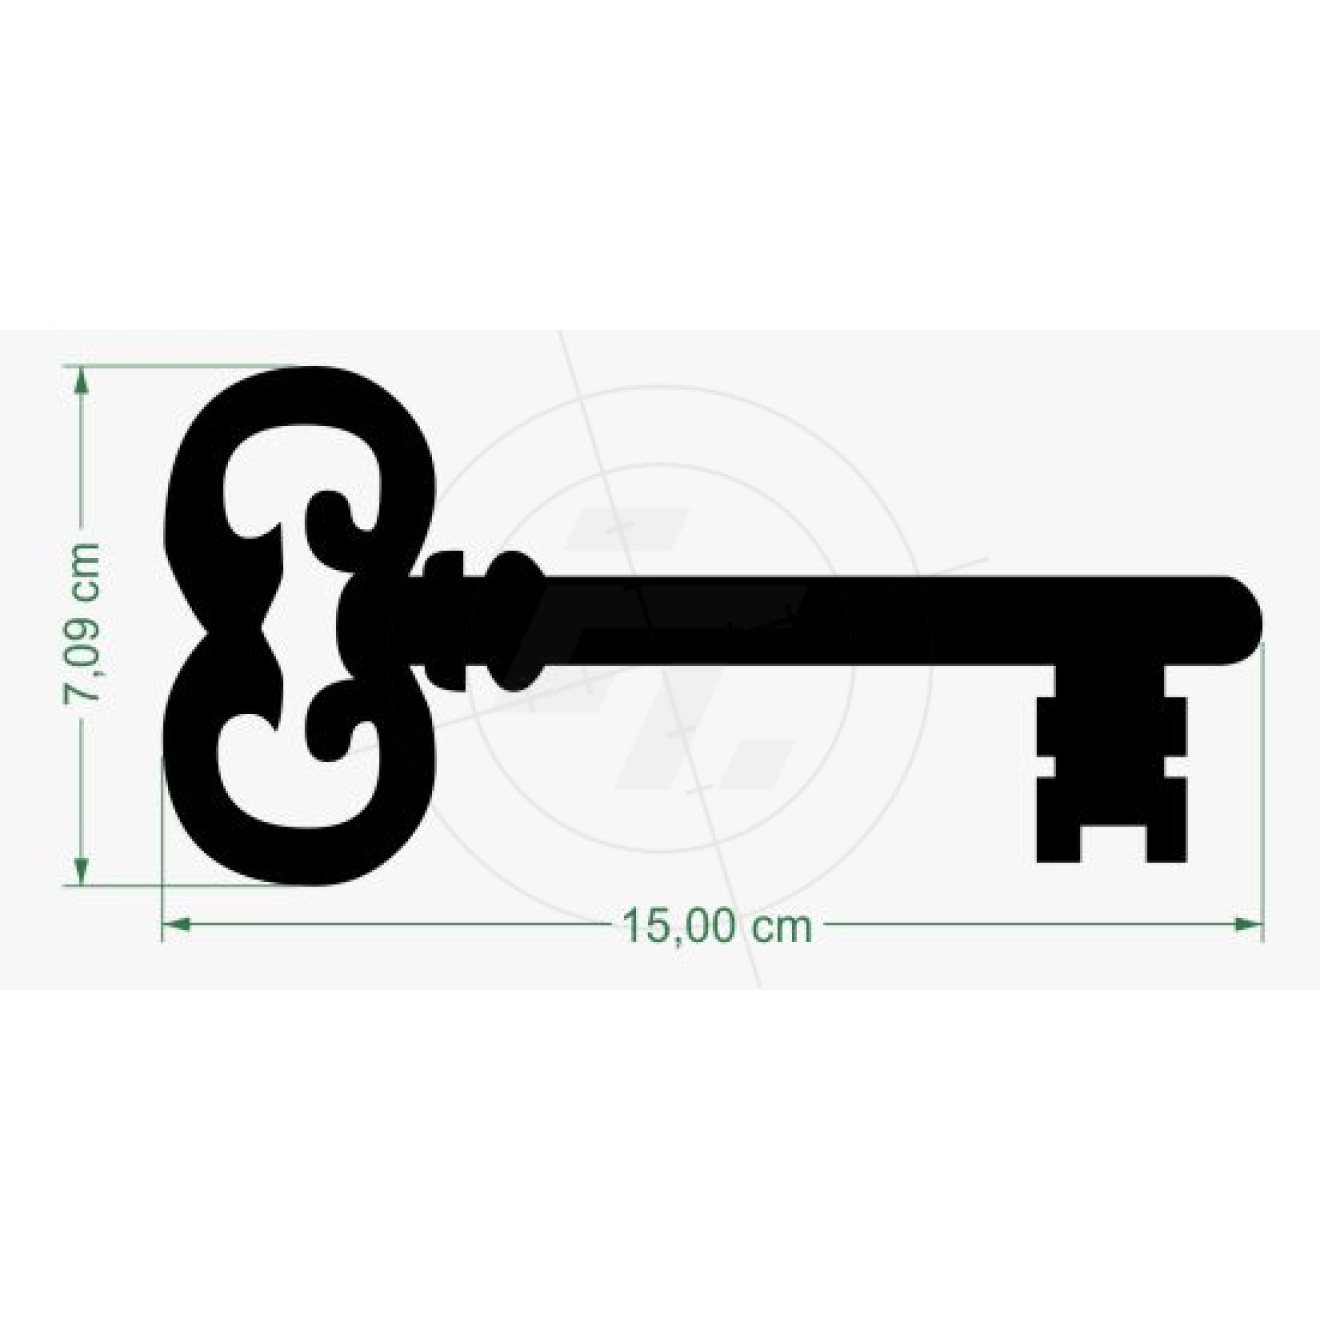 Key, old door key